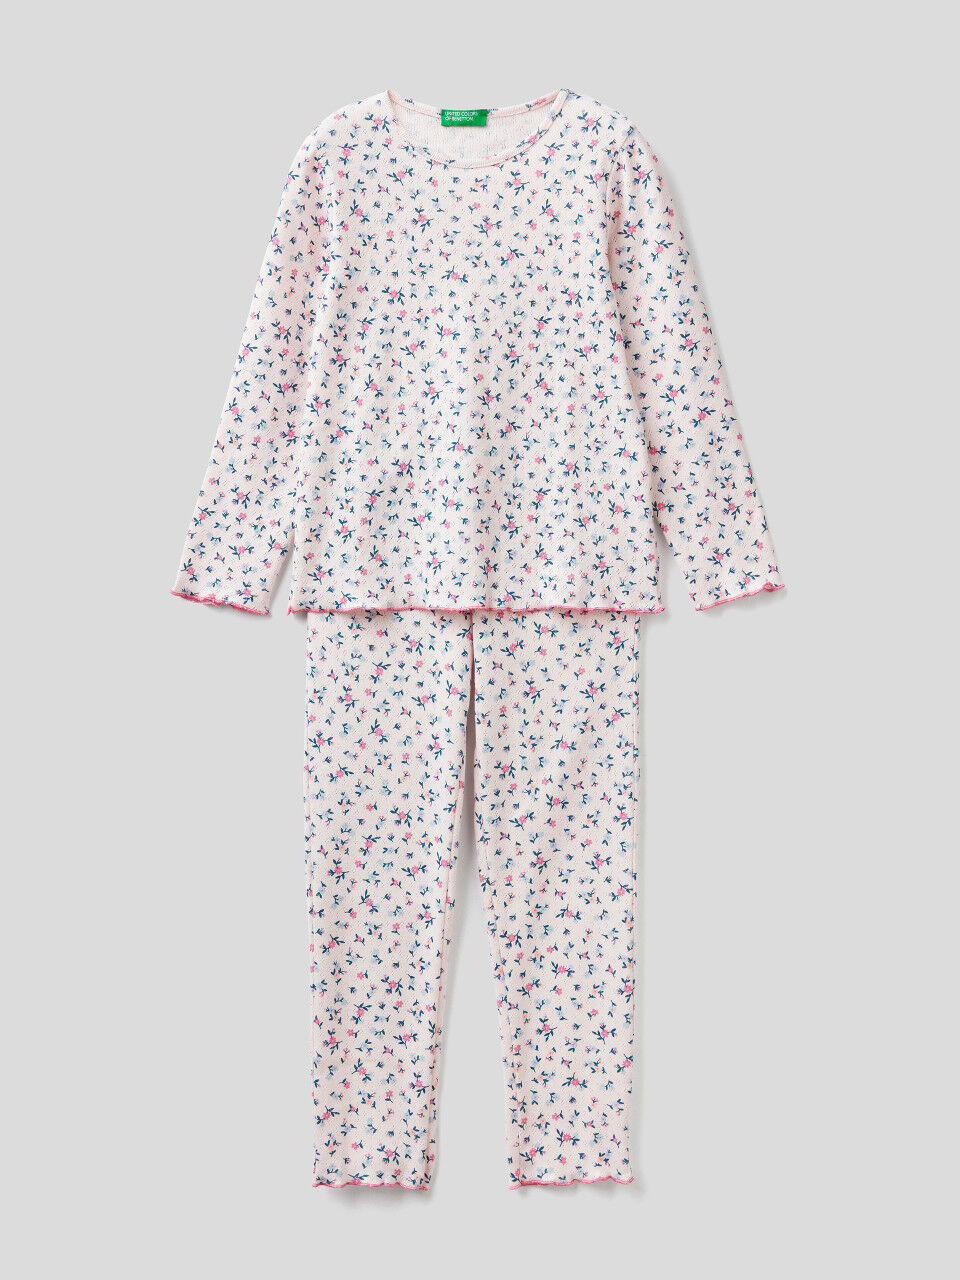 Pijama estampado de 100 % algodón